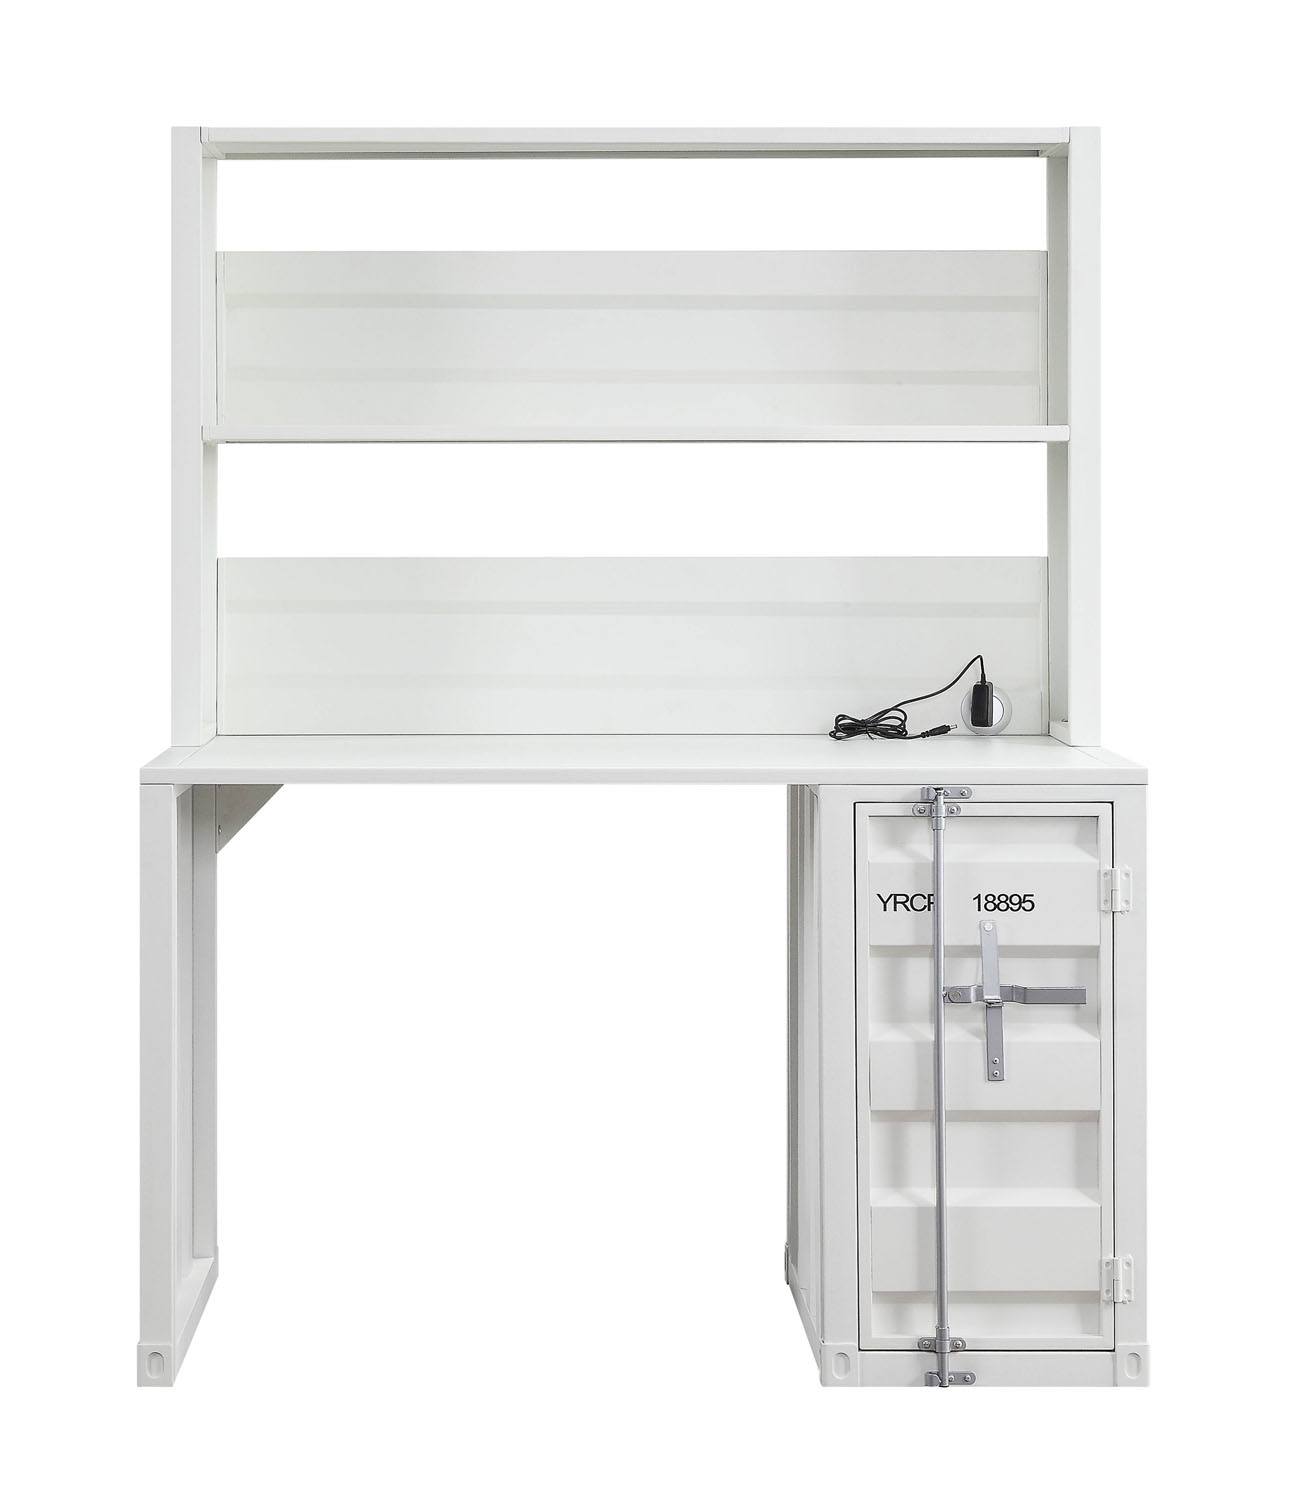 Konto Industrial Desk and Hutch - White